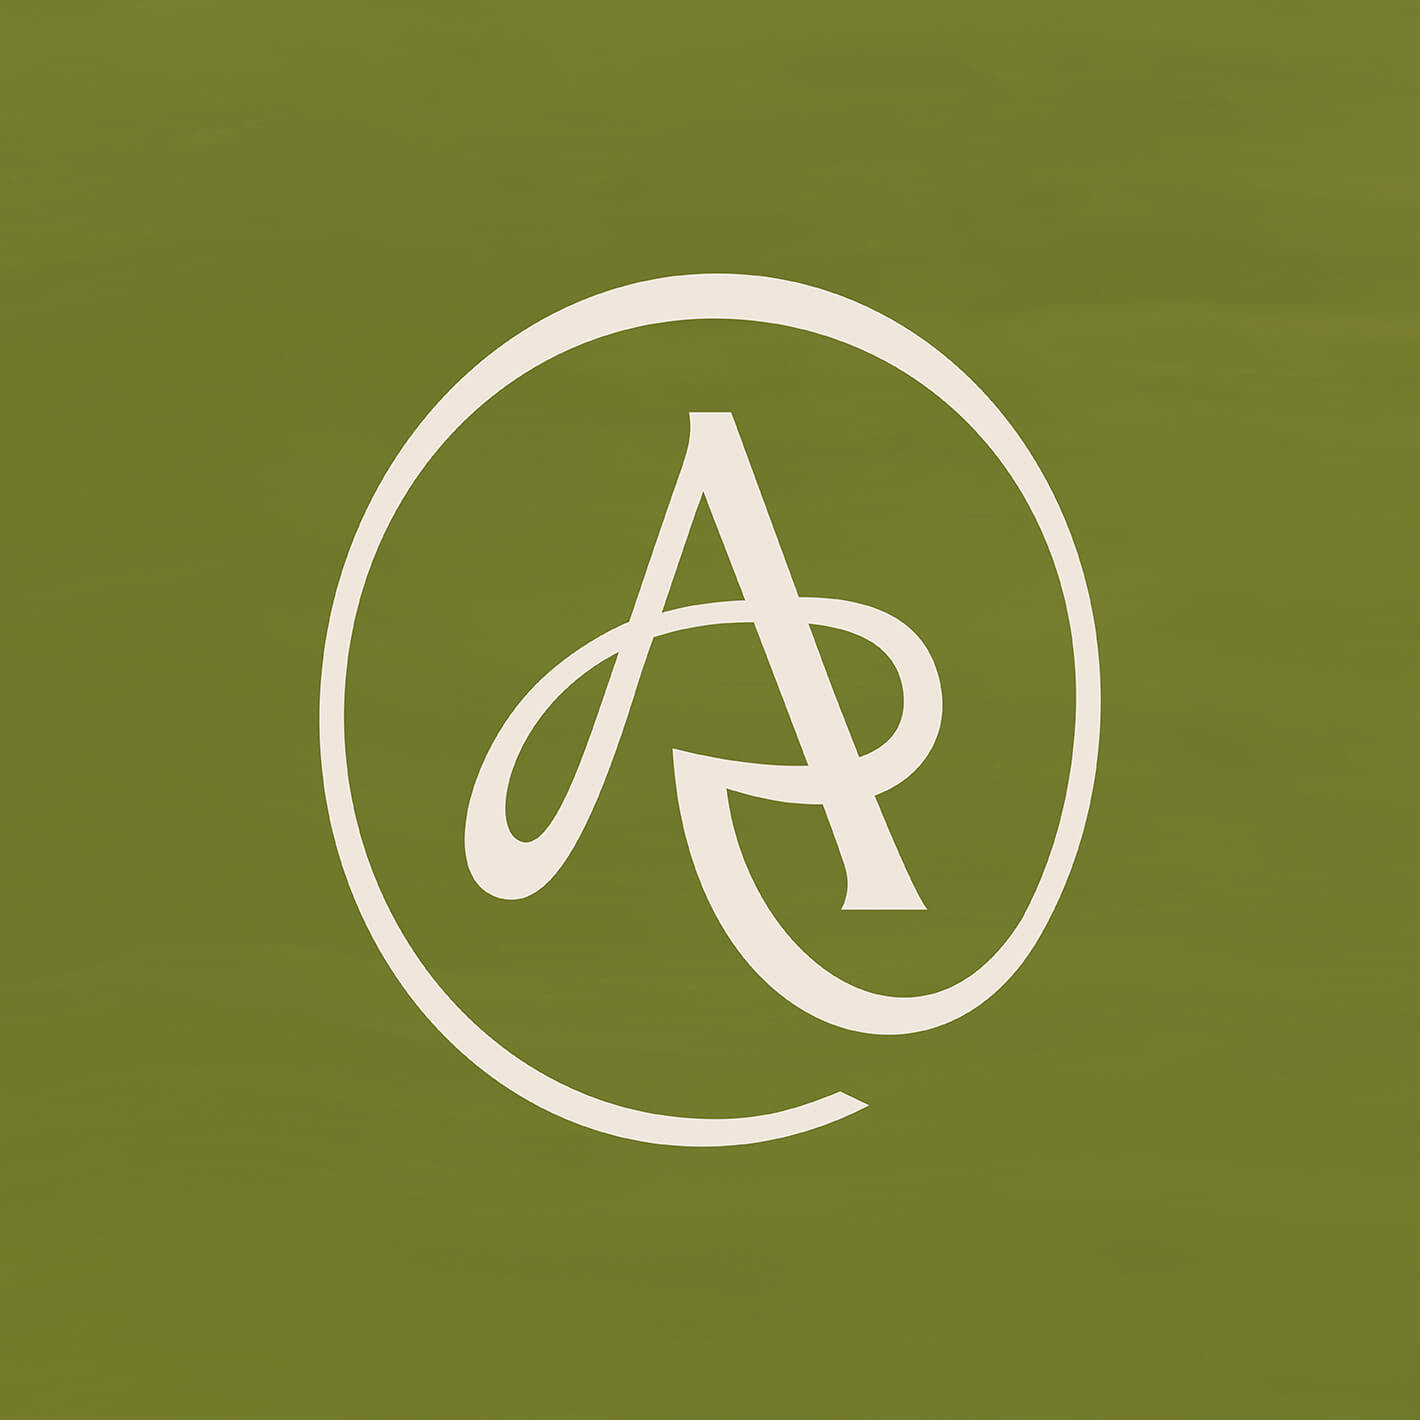 Anna Rogan AR monogram created for Australiana inspired copywriter brand identity